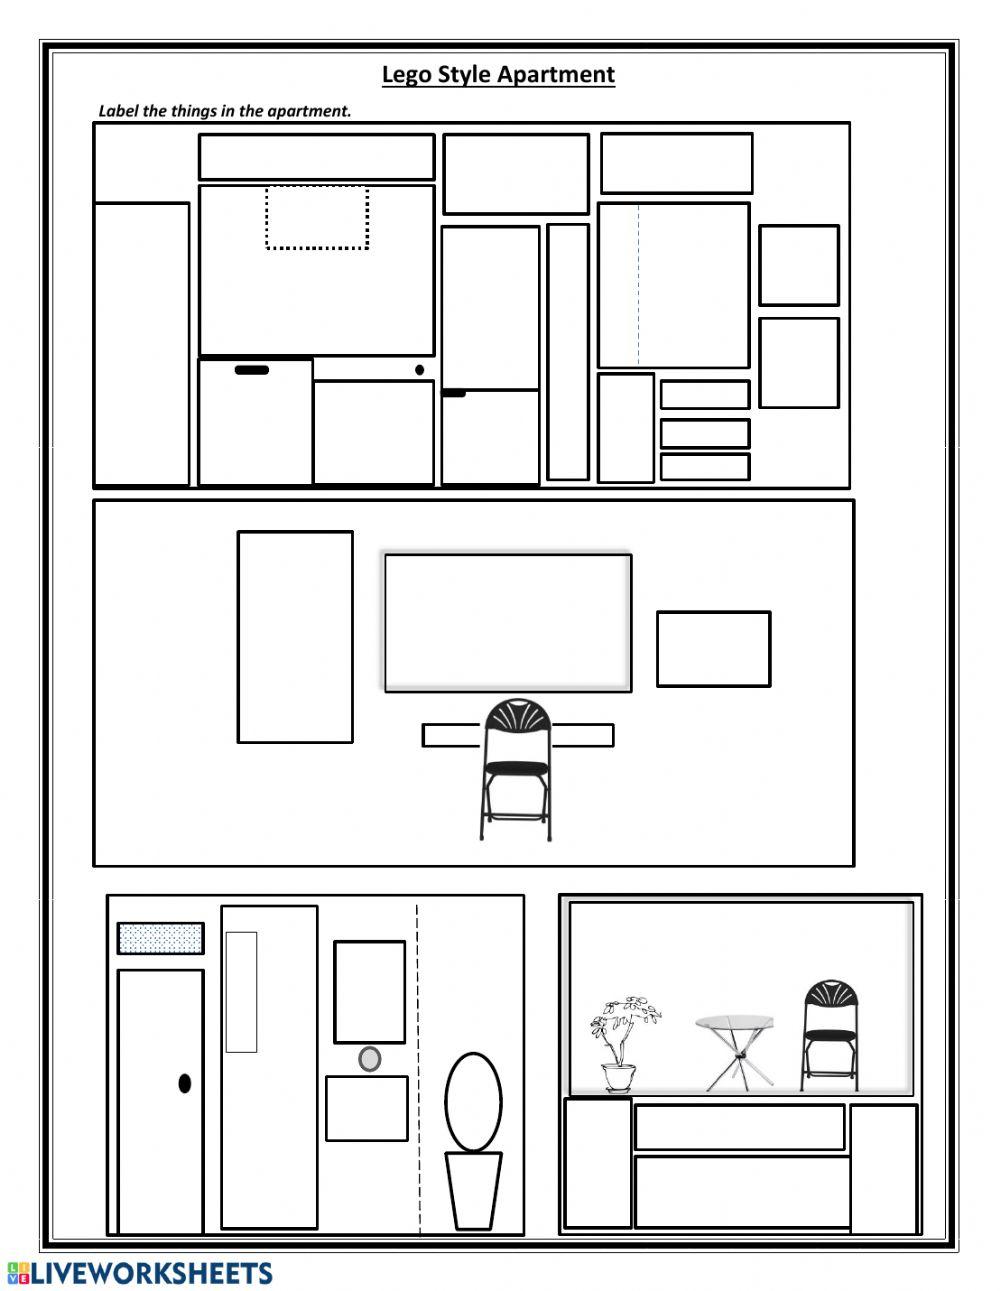 Housing -- Lego Style Apartment